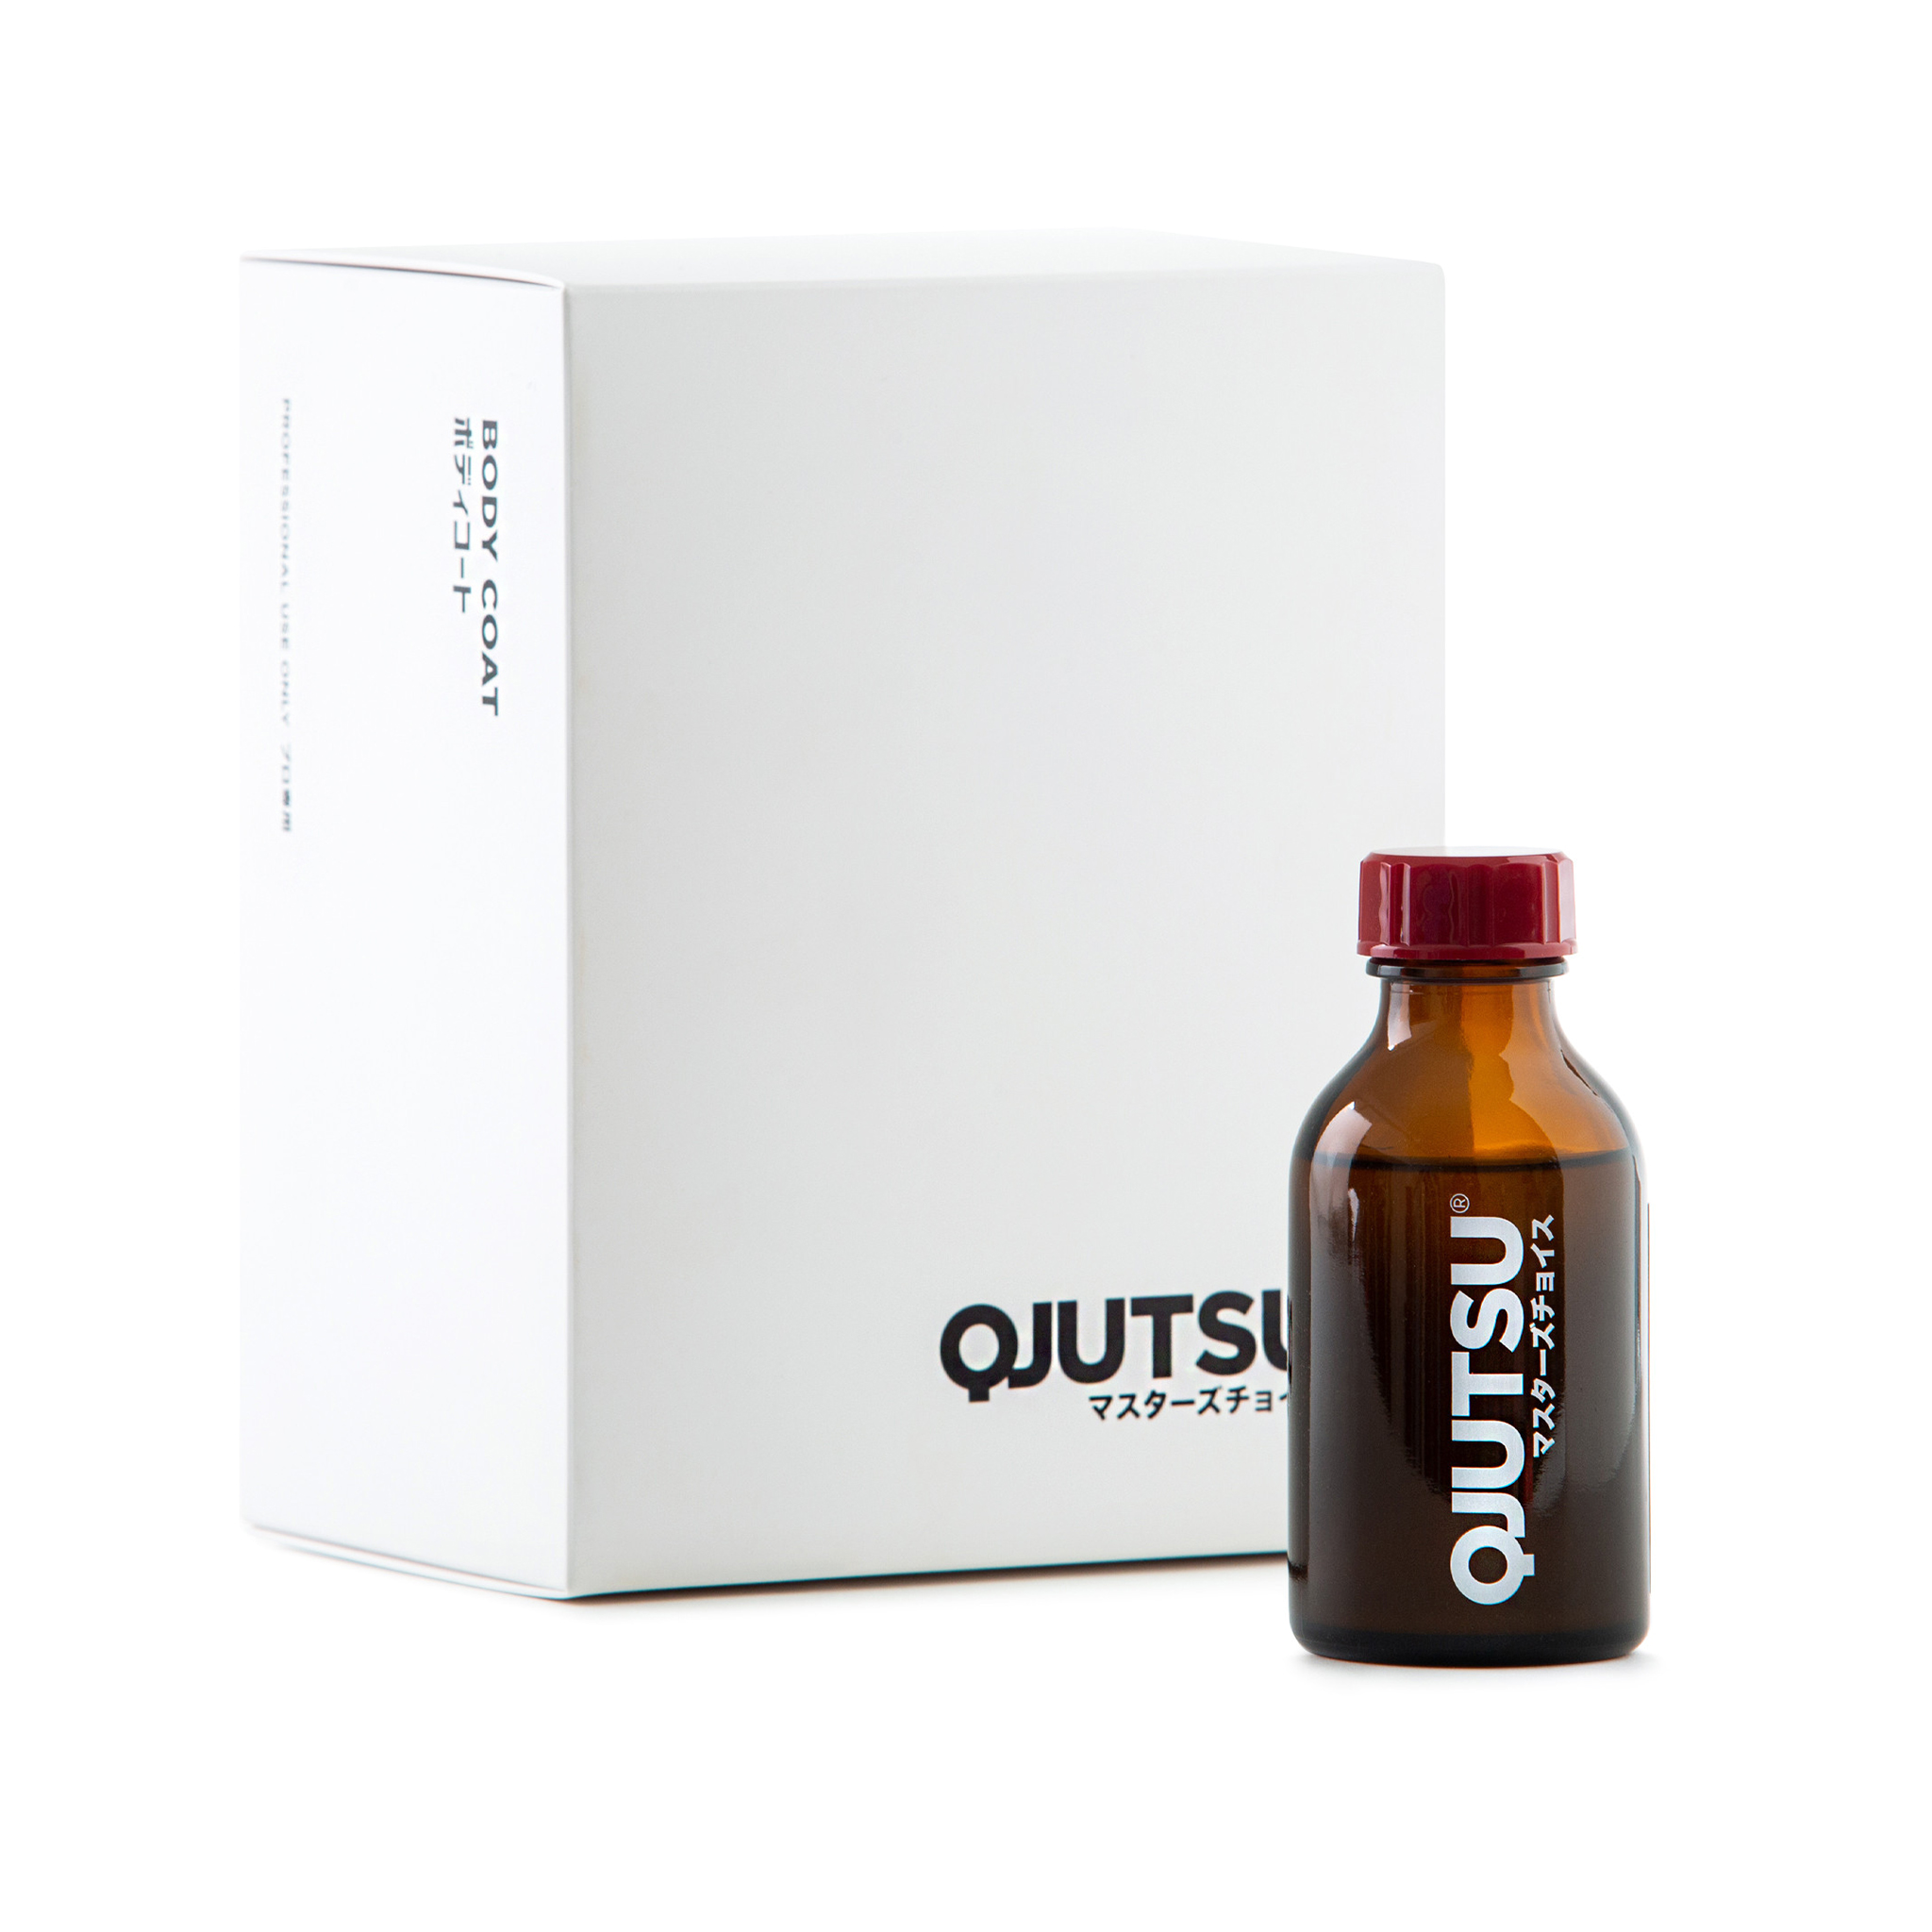 Lackförsegling Soft99 Qjutsu Body Coat, 100 ml